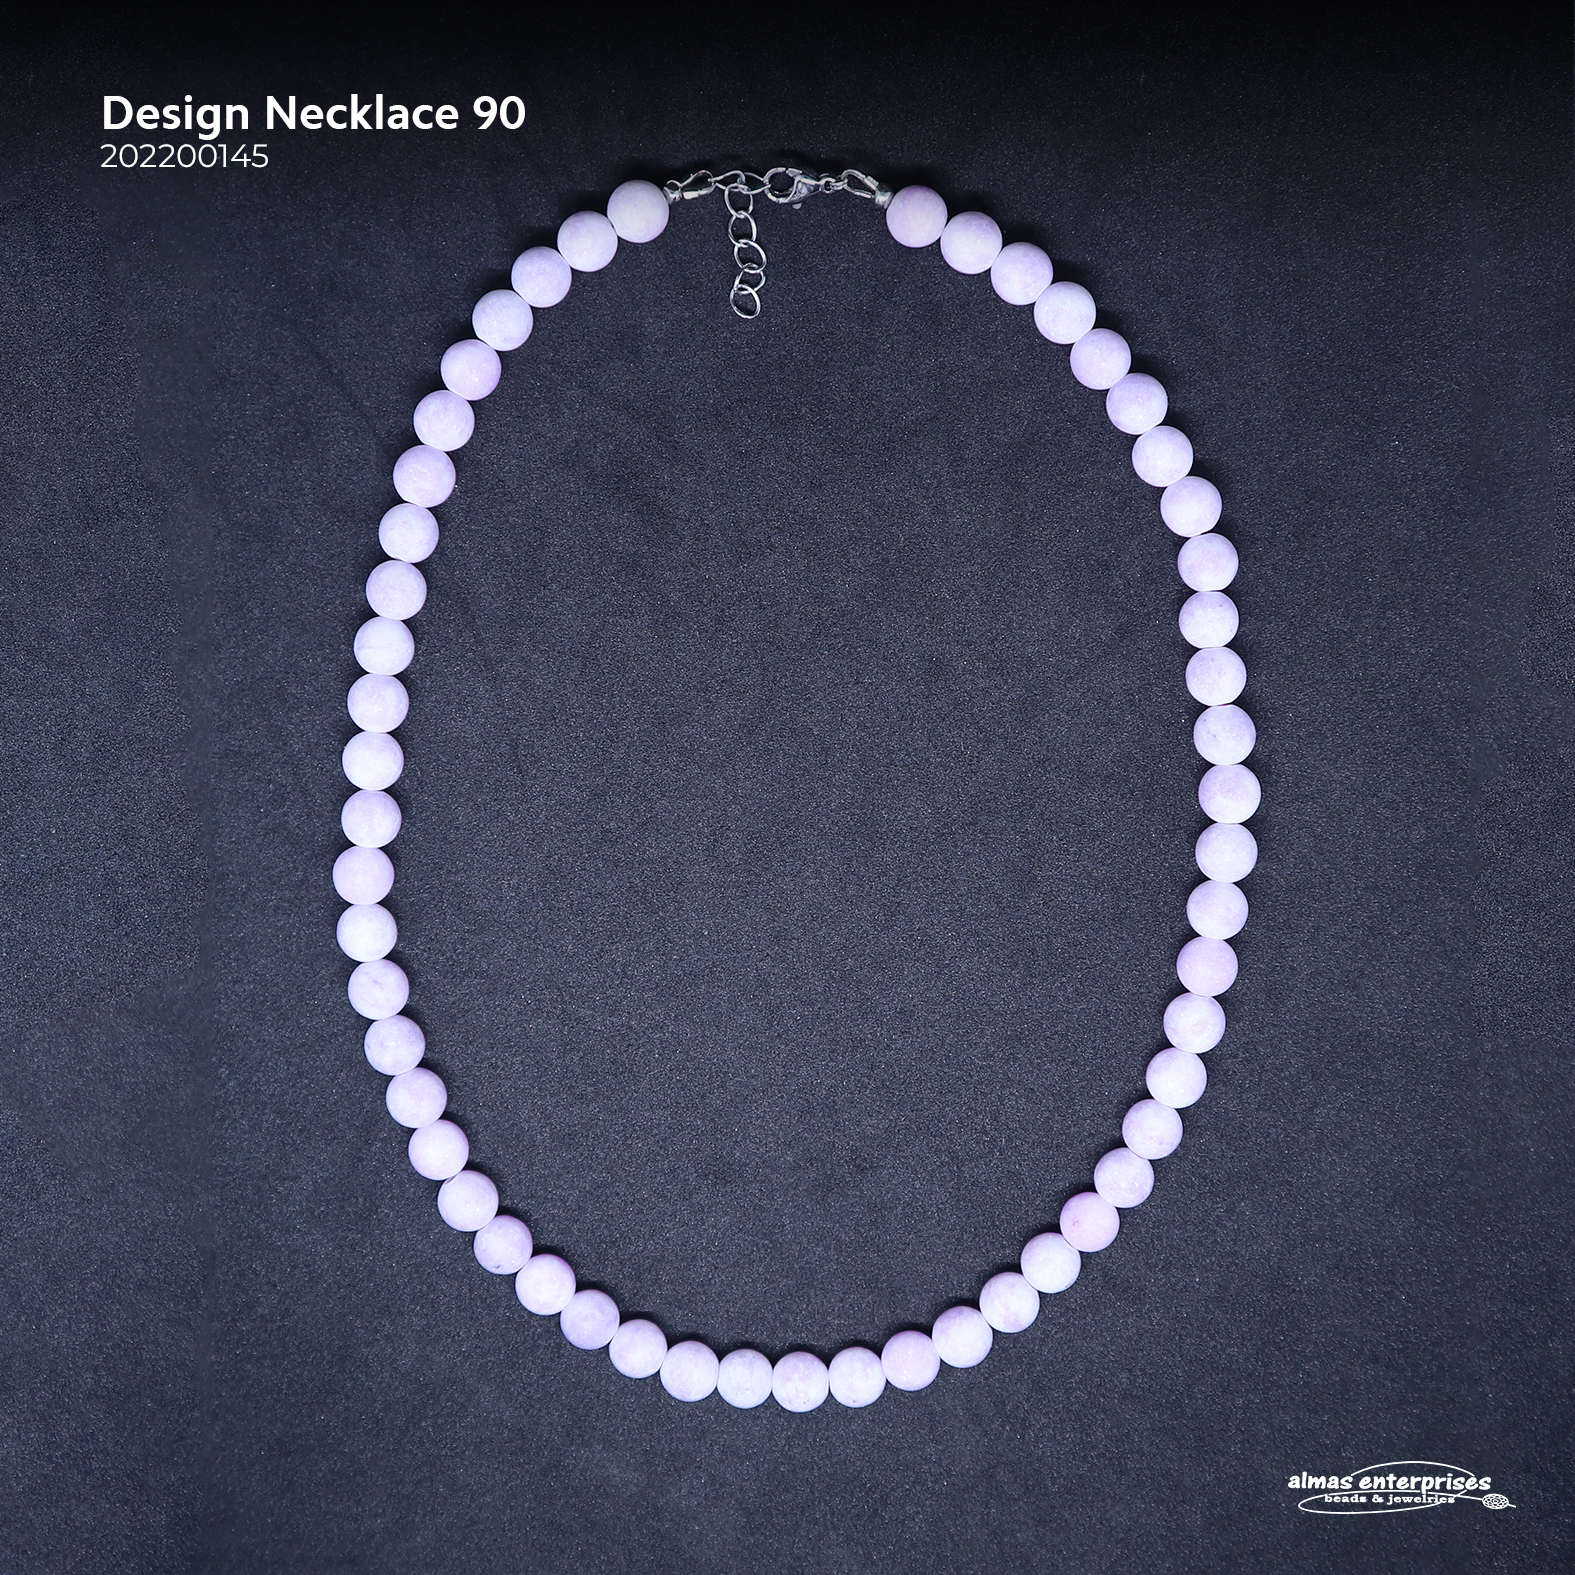 Design Necklace 90